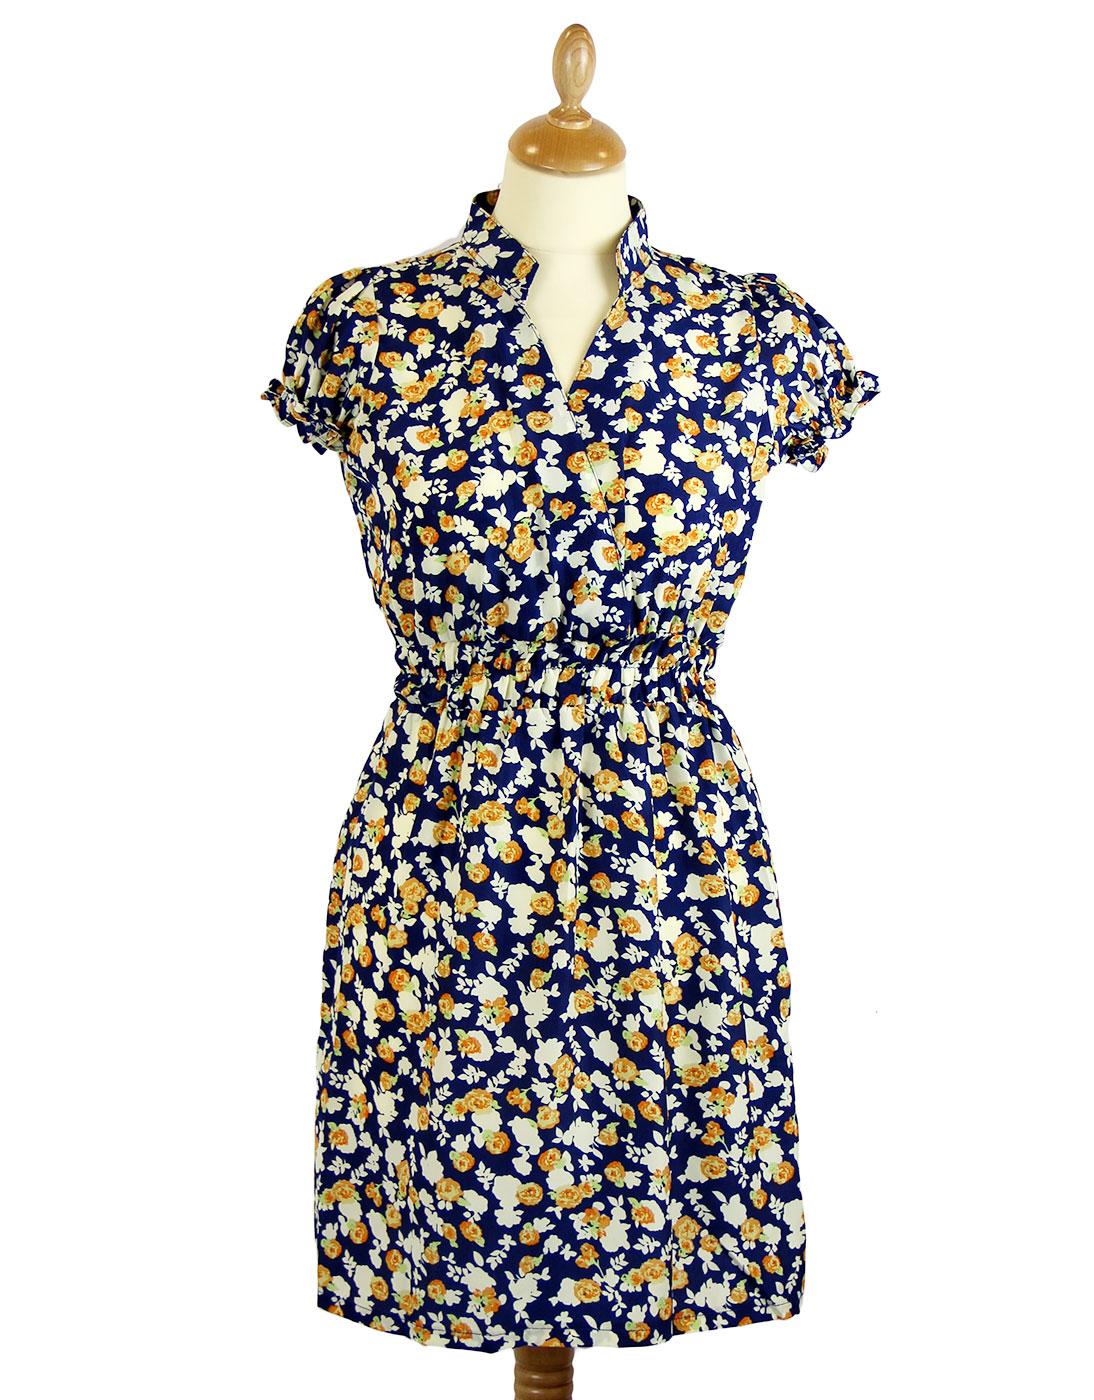 Lovestruck 'Deirdre' Retro Vintage style Tea Dress in Blue Floral